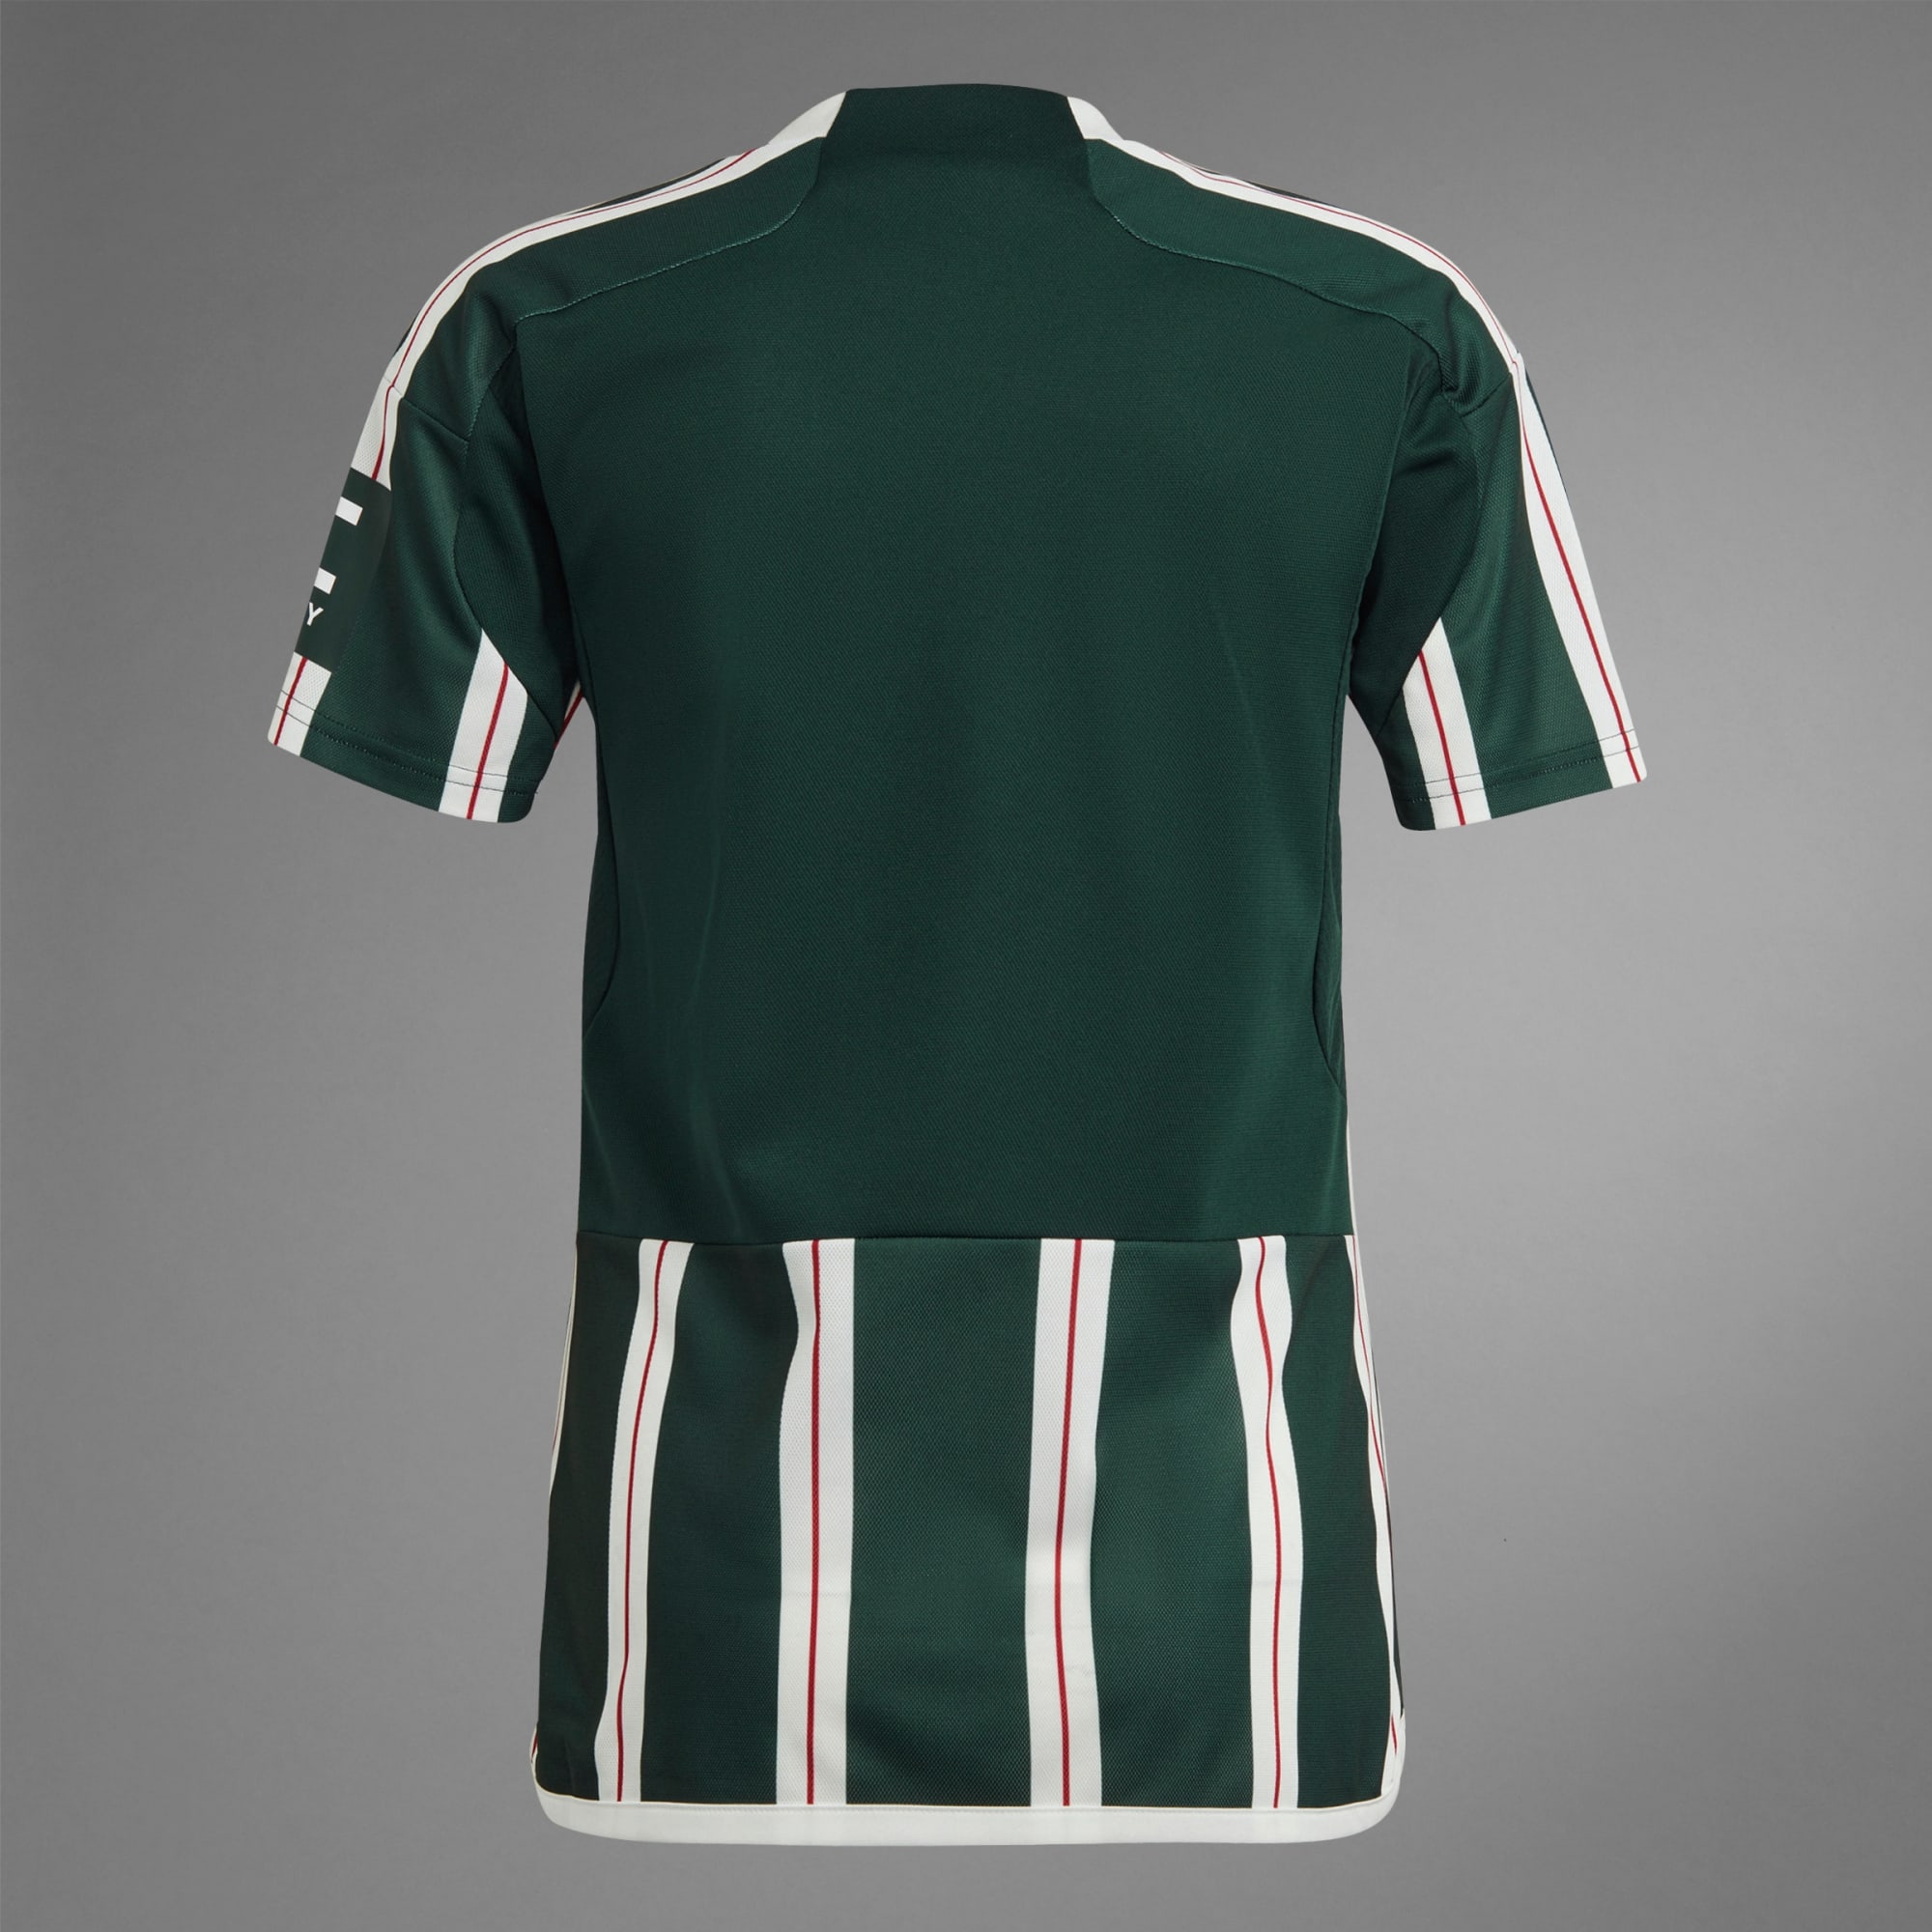 Clothing - Orlando Pirates FC 23/24 Away Jersey - Green